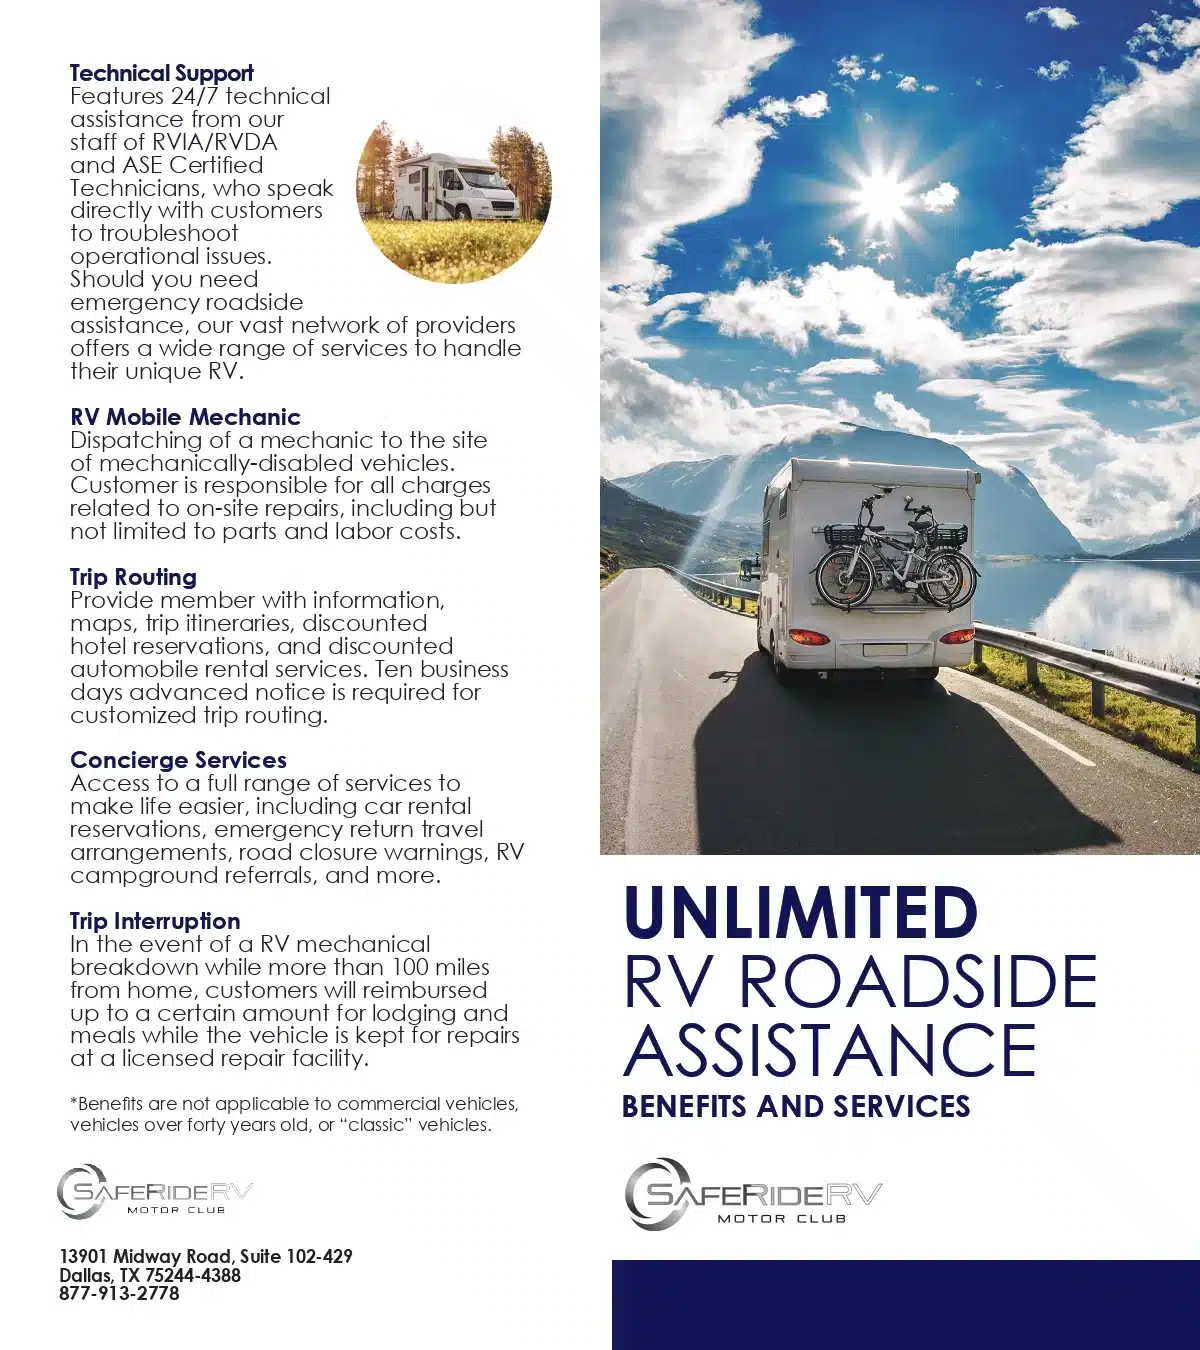 Unlimited Roadside SafeRide RV